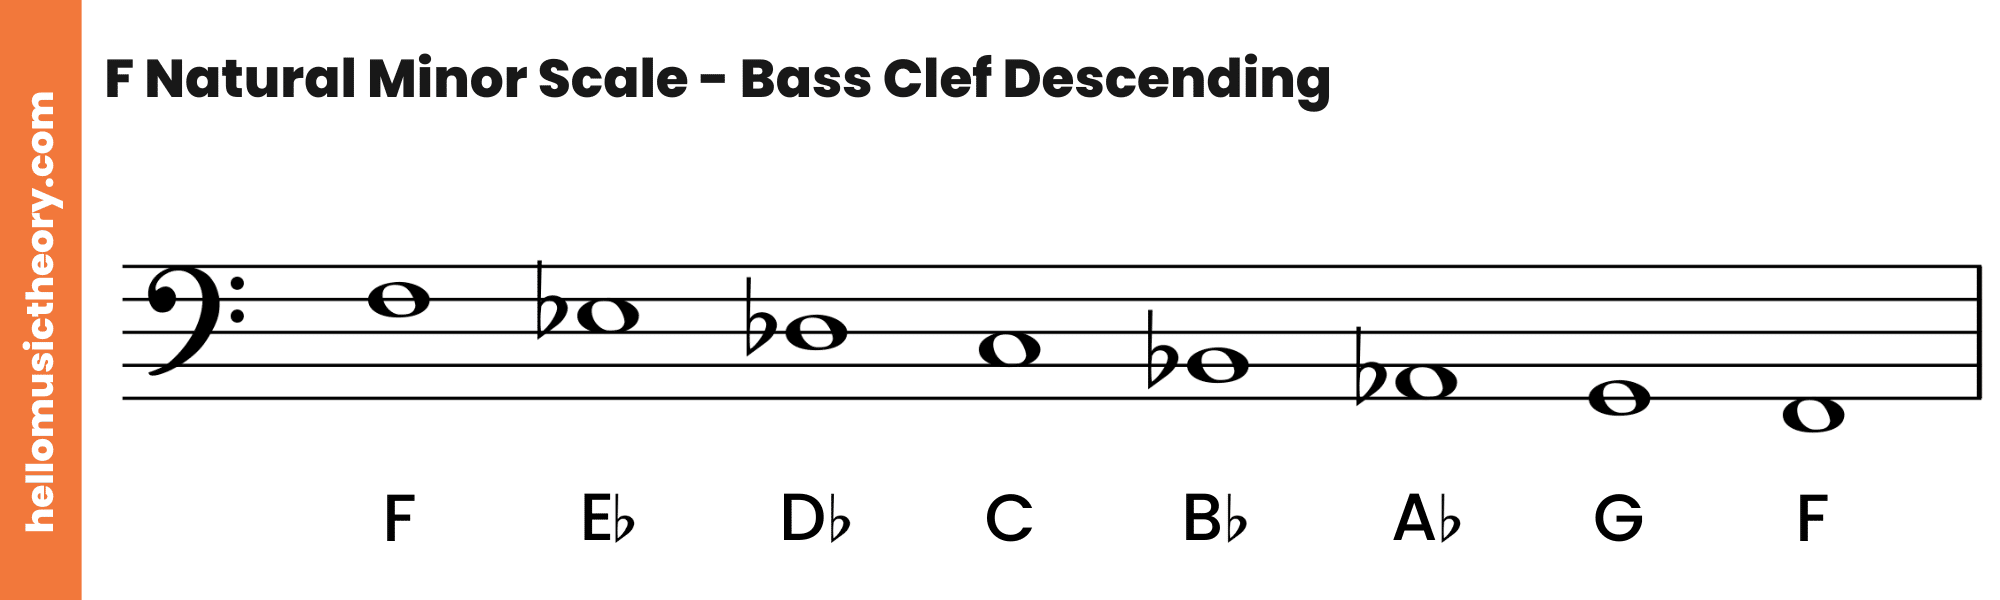 F Natural Minor Scale Bass Clef Descending